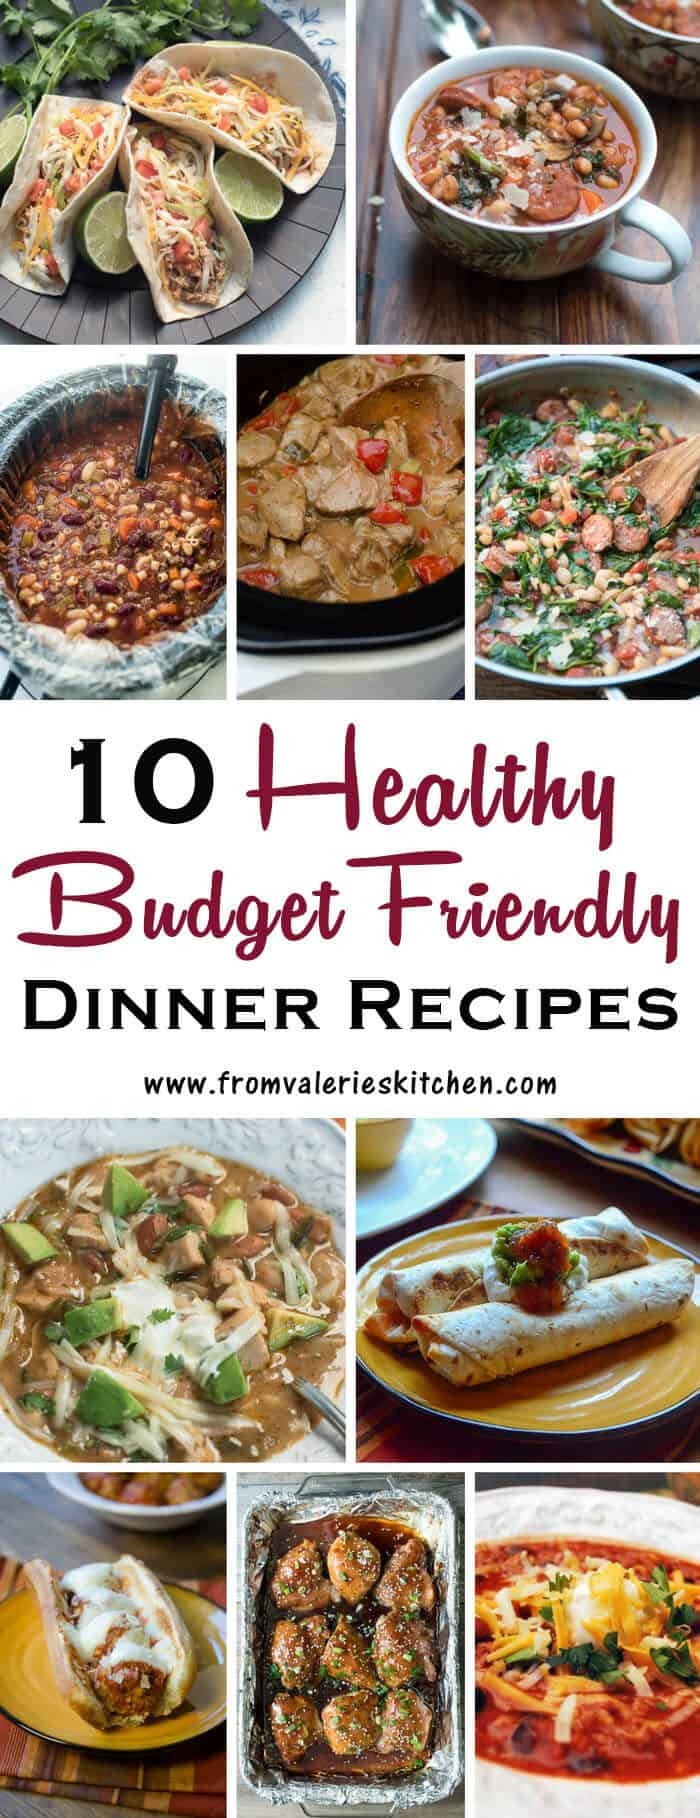 Pinterest Dinner Ideas
 10 Healthy Dinner Recipes on a Bud Valerie s Kitchen